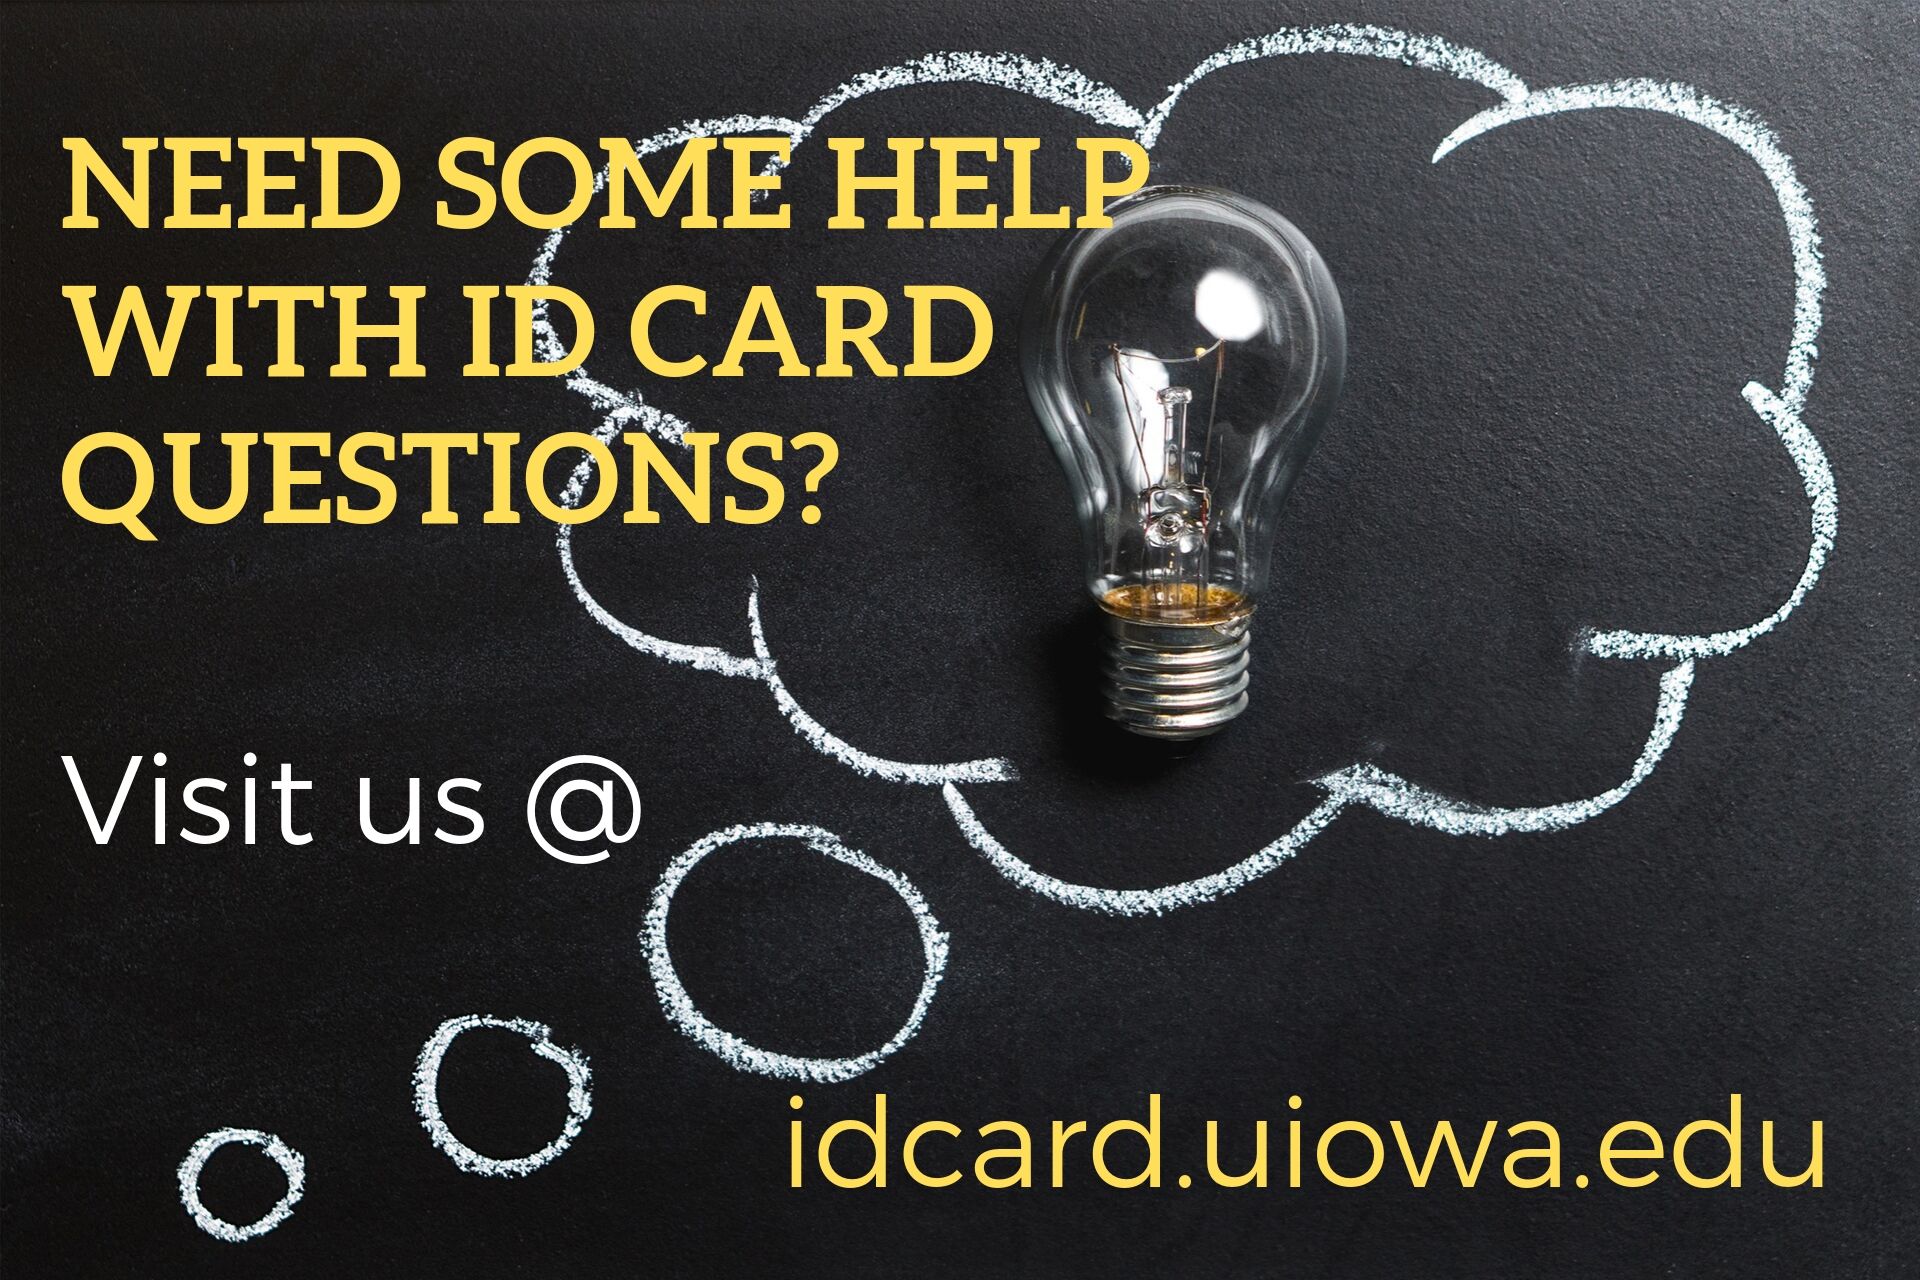 ID Card Website